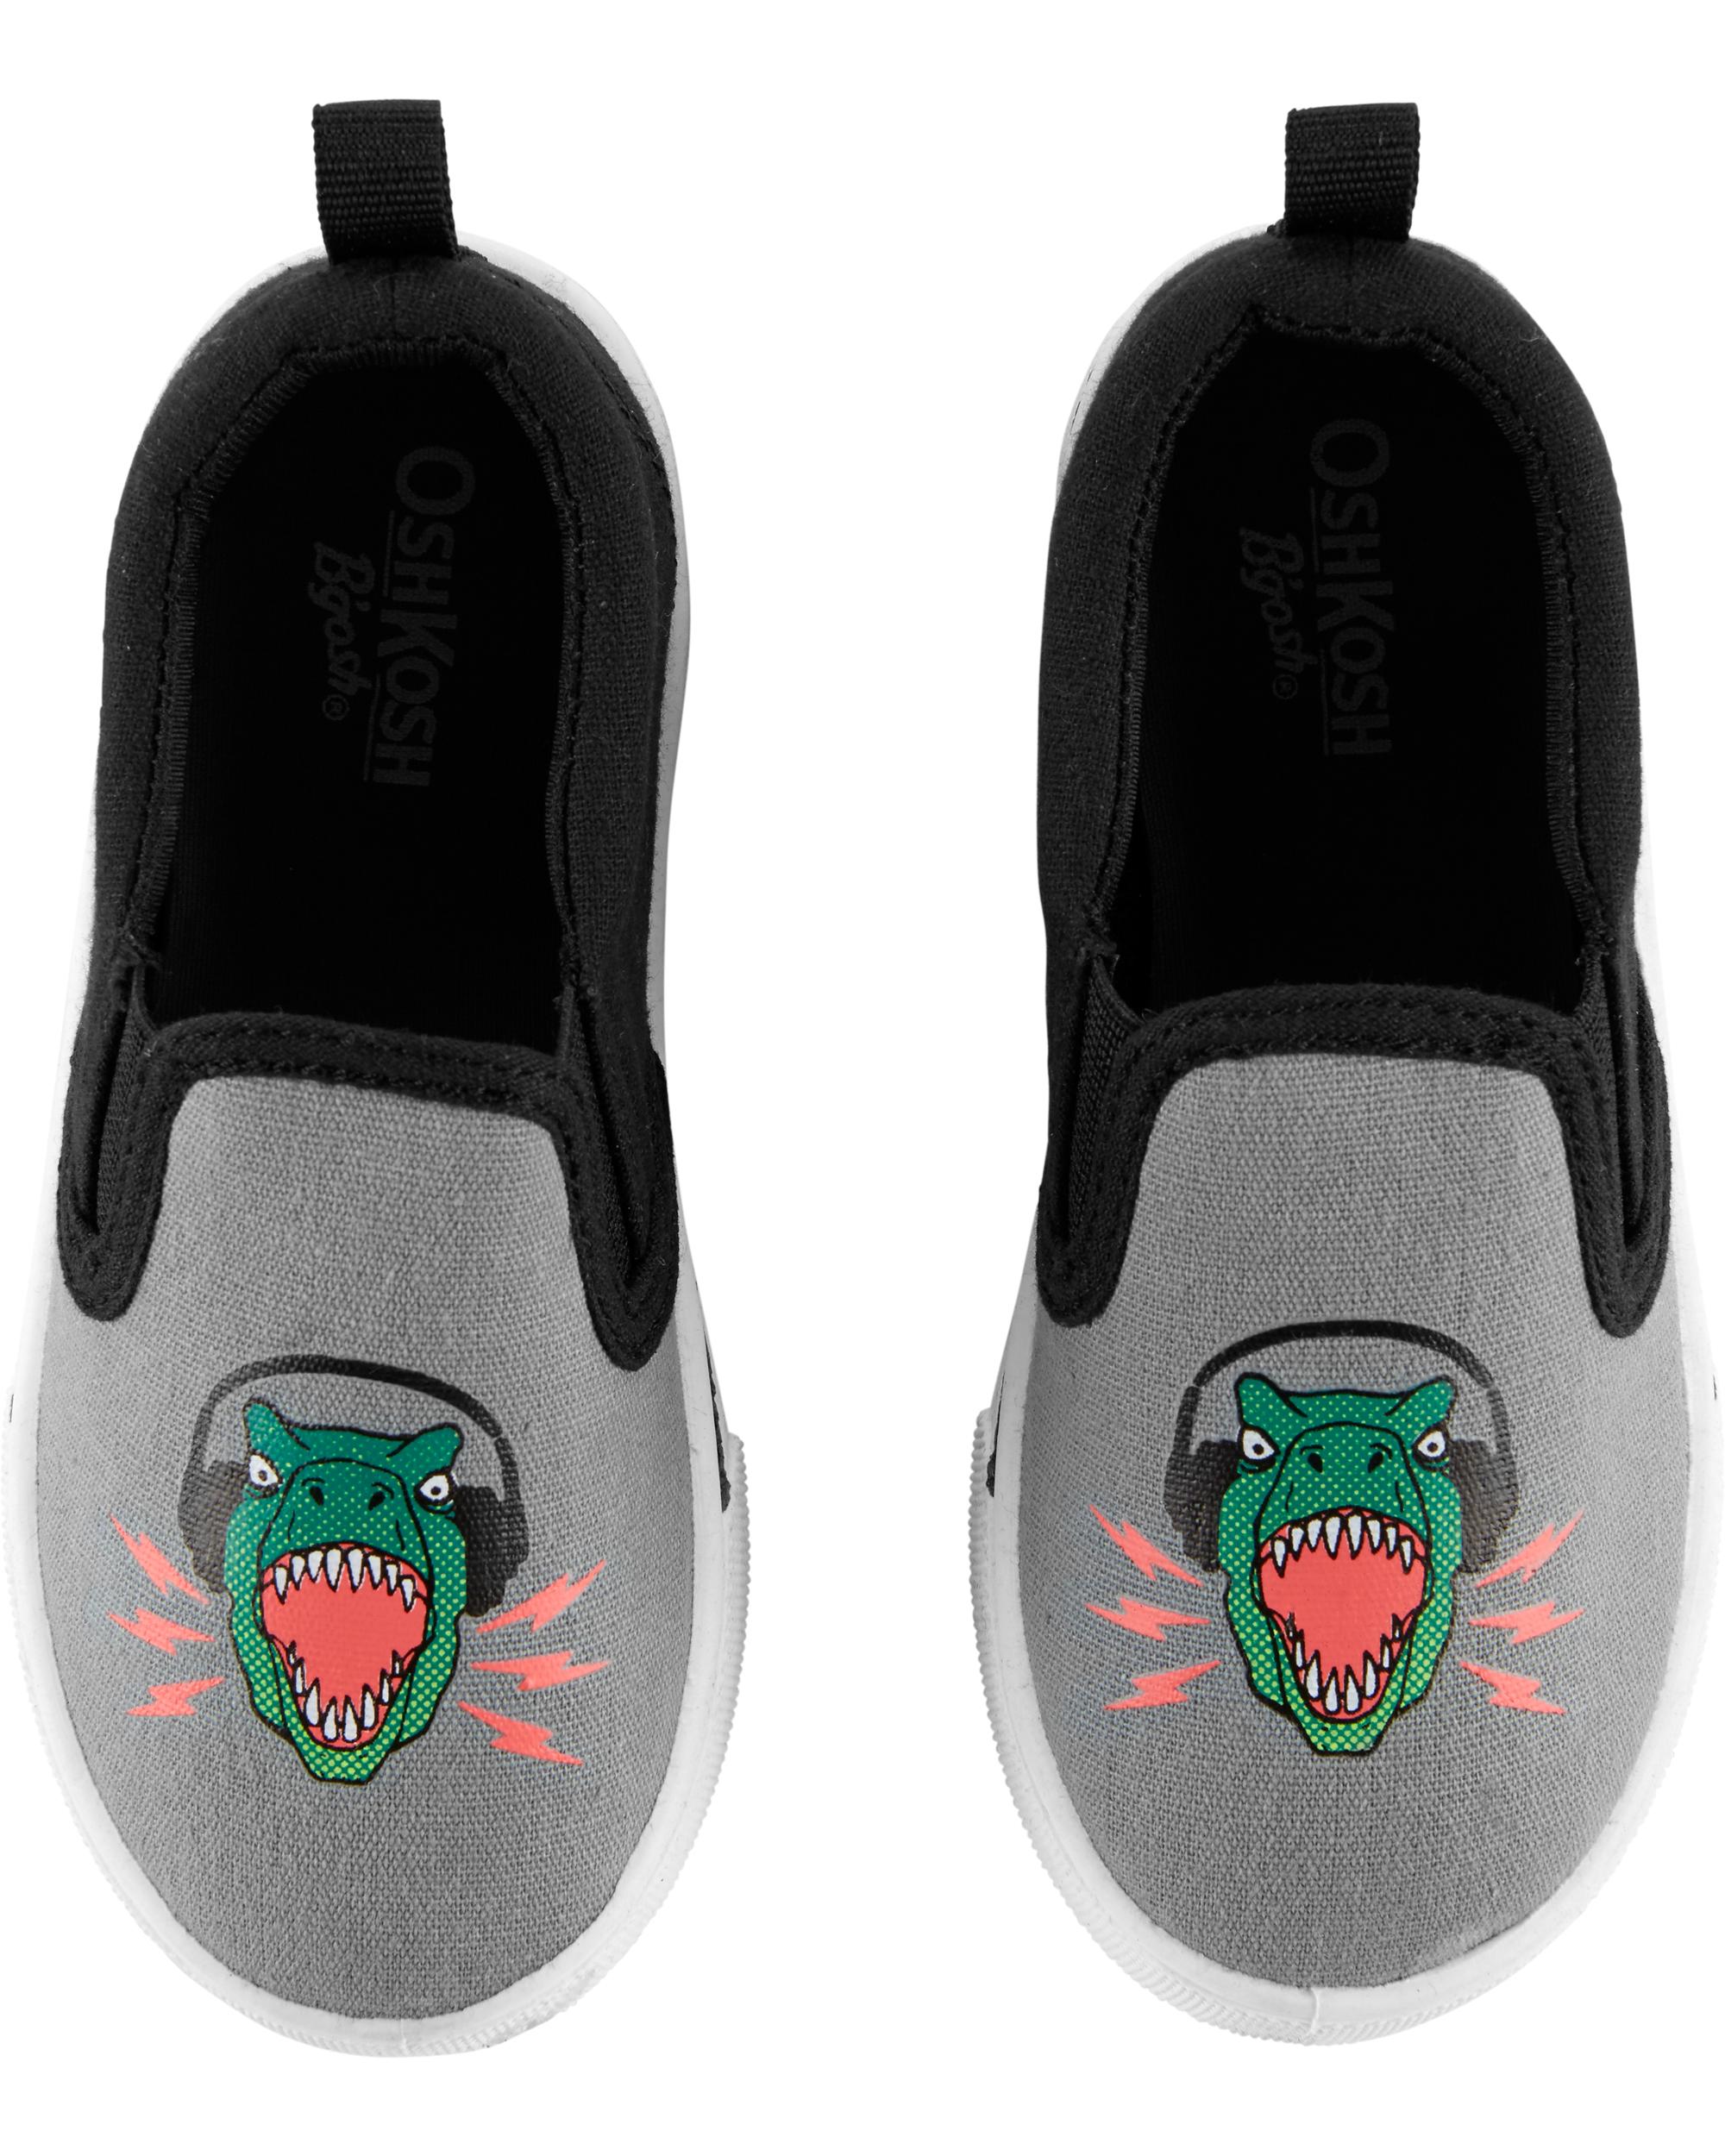 Dinosaur Slip-On Shoes | carters.com